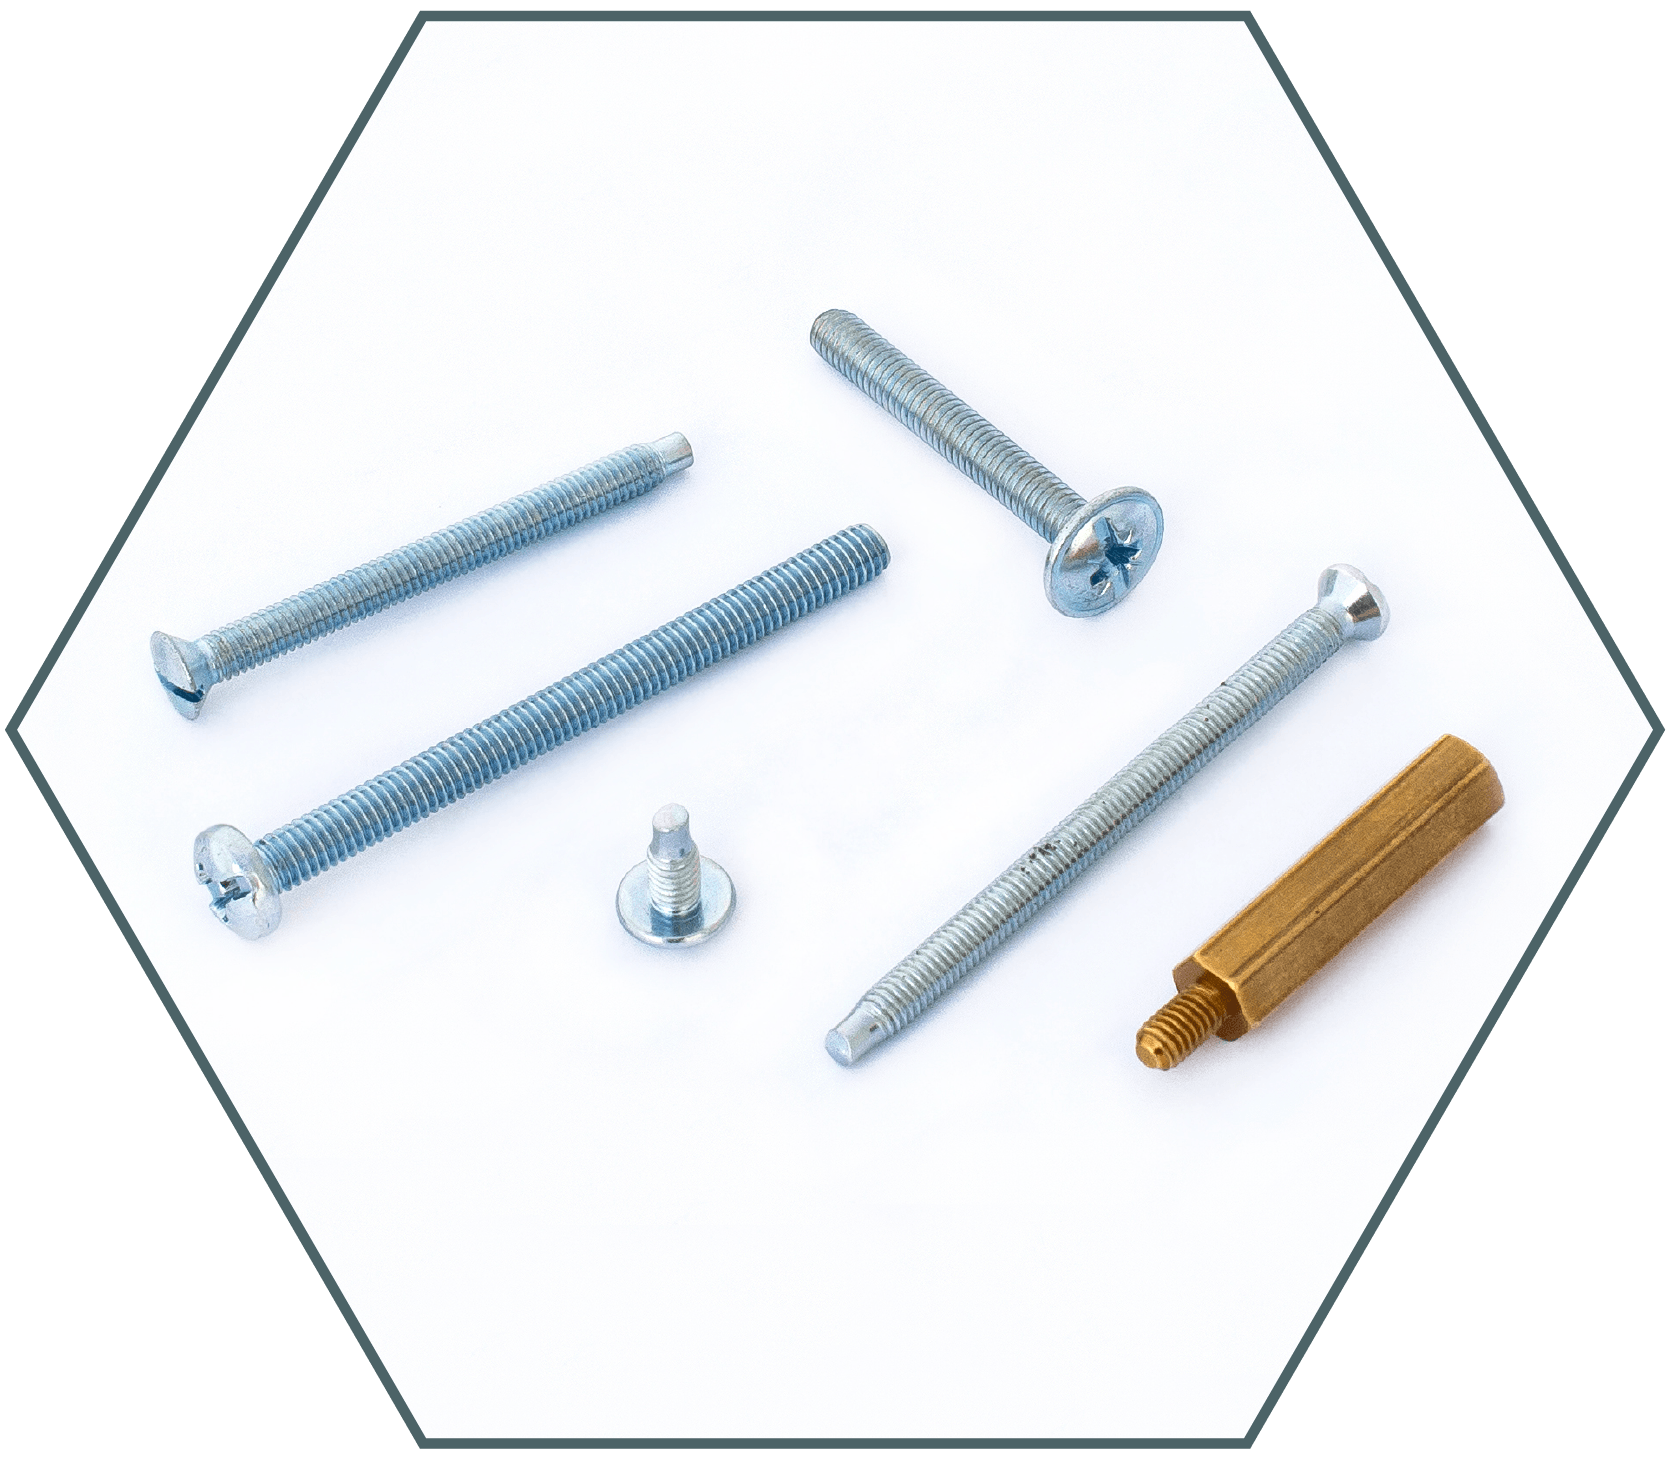 Fasteners specialists - Machine screws